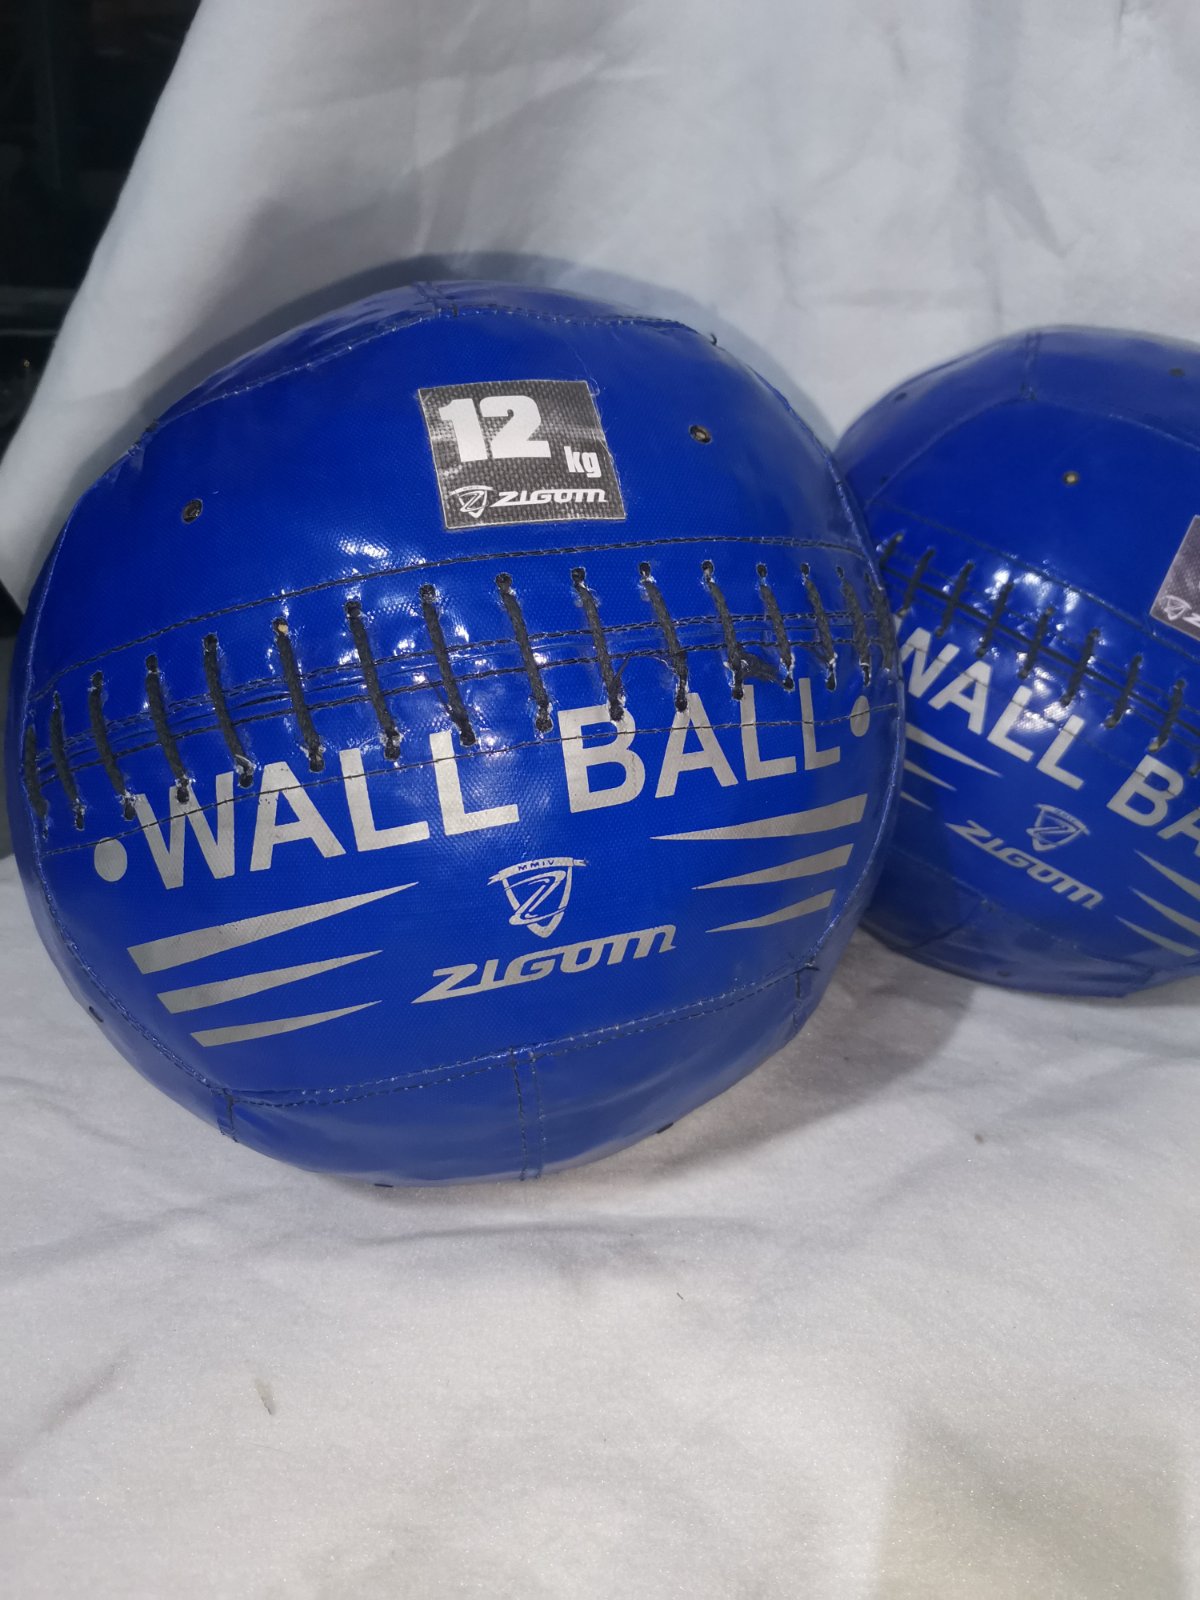 zigom-wall-ball-6-kg-162798449211635831976109126c61c2f.jpg